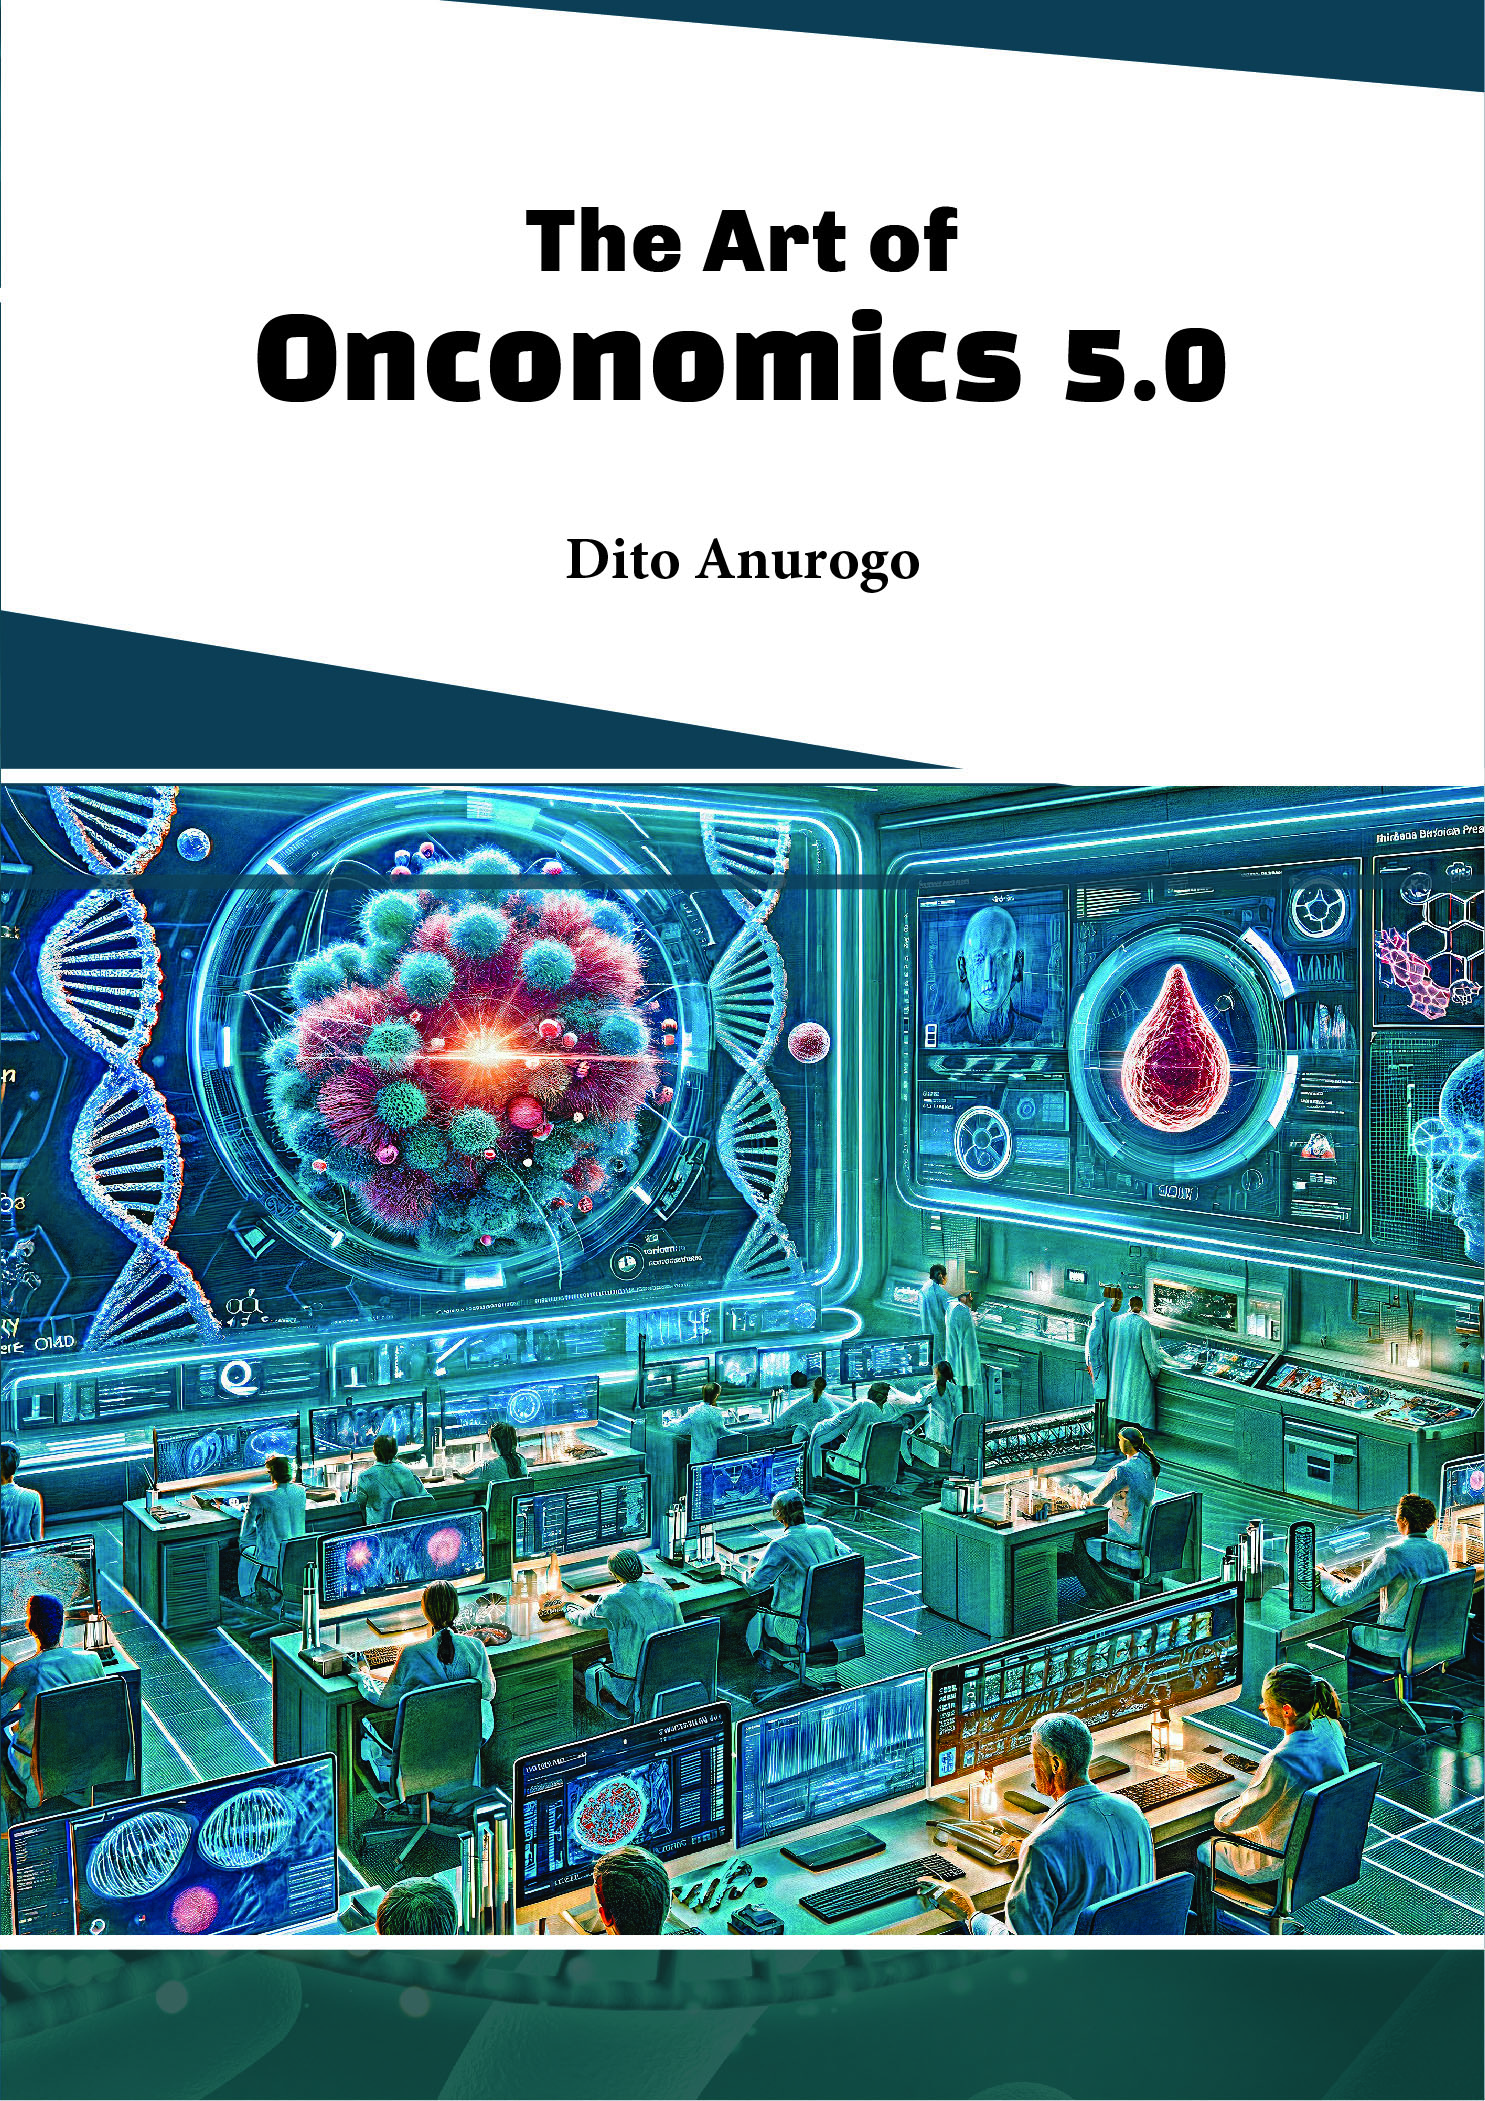 The Art of Onconomics 5.0